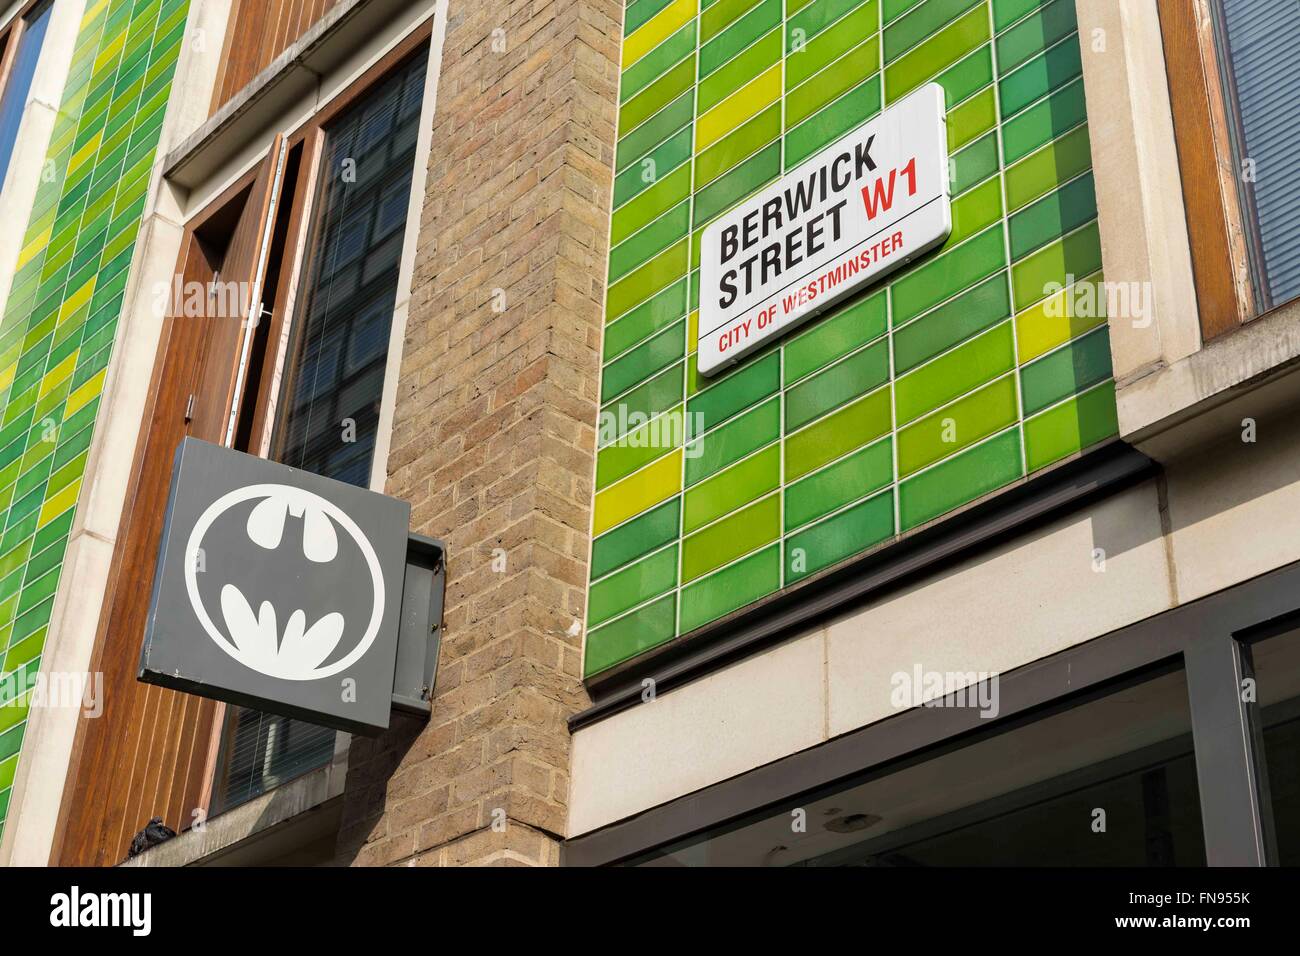 Berwick Street street sign, London W1, set on green tiled background adjacent to Stock Photo